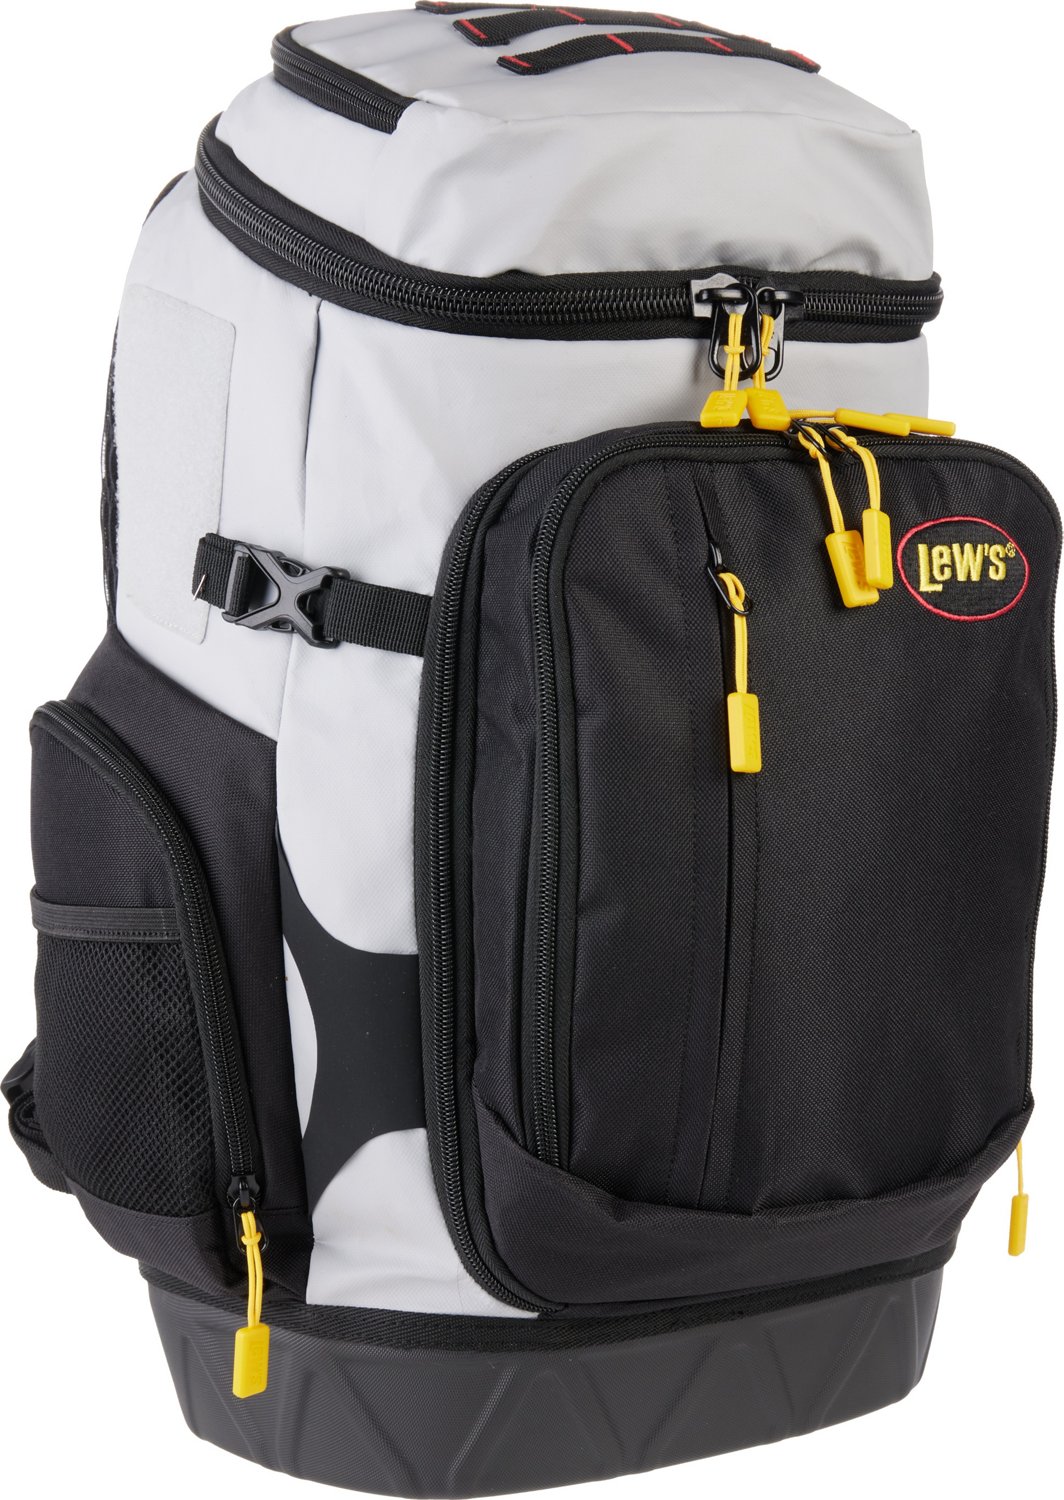 Lew's Utility Tackle Bag, Medium, White